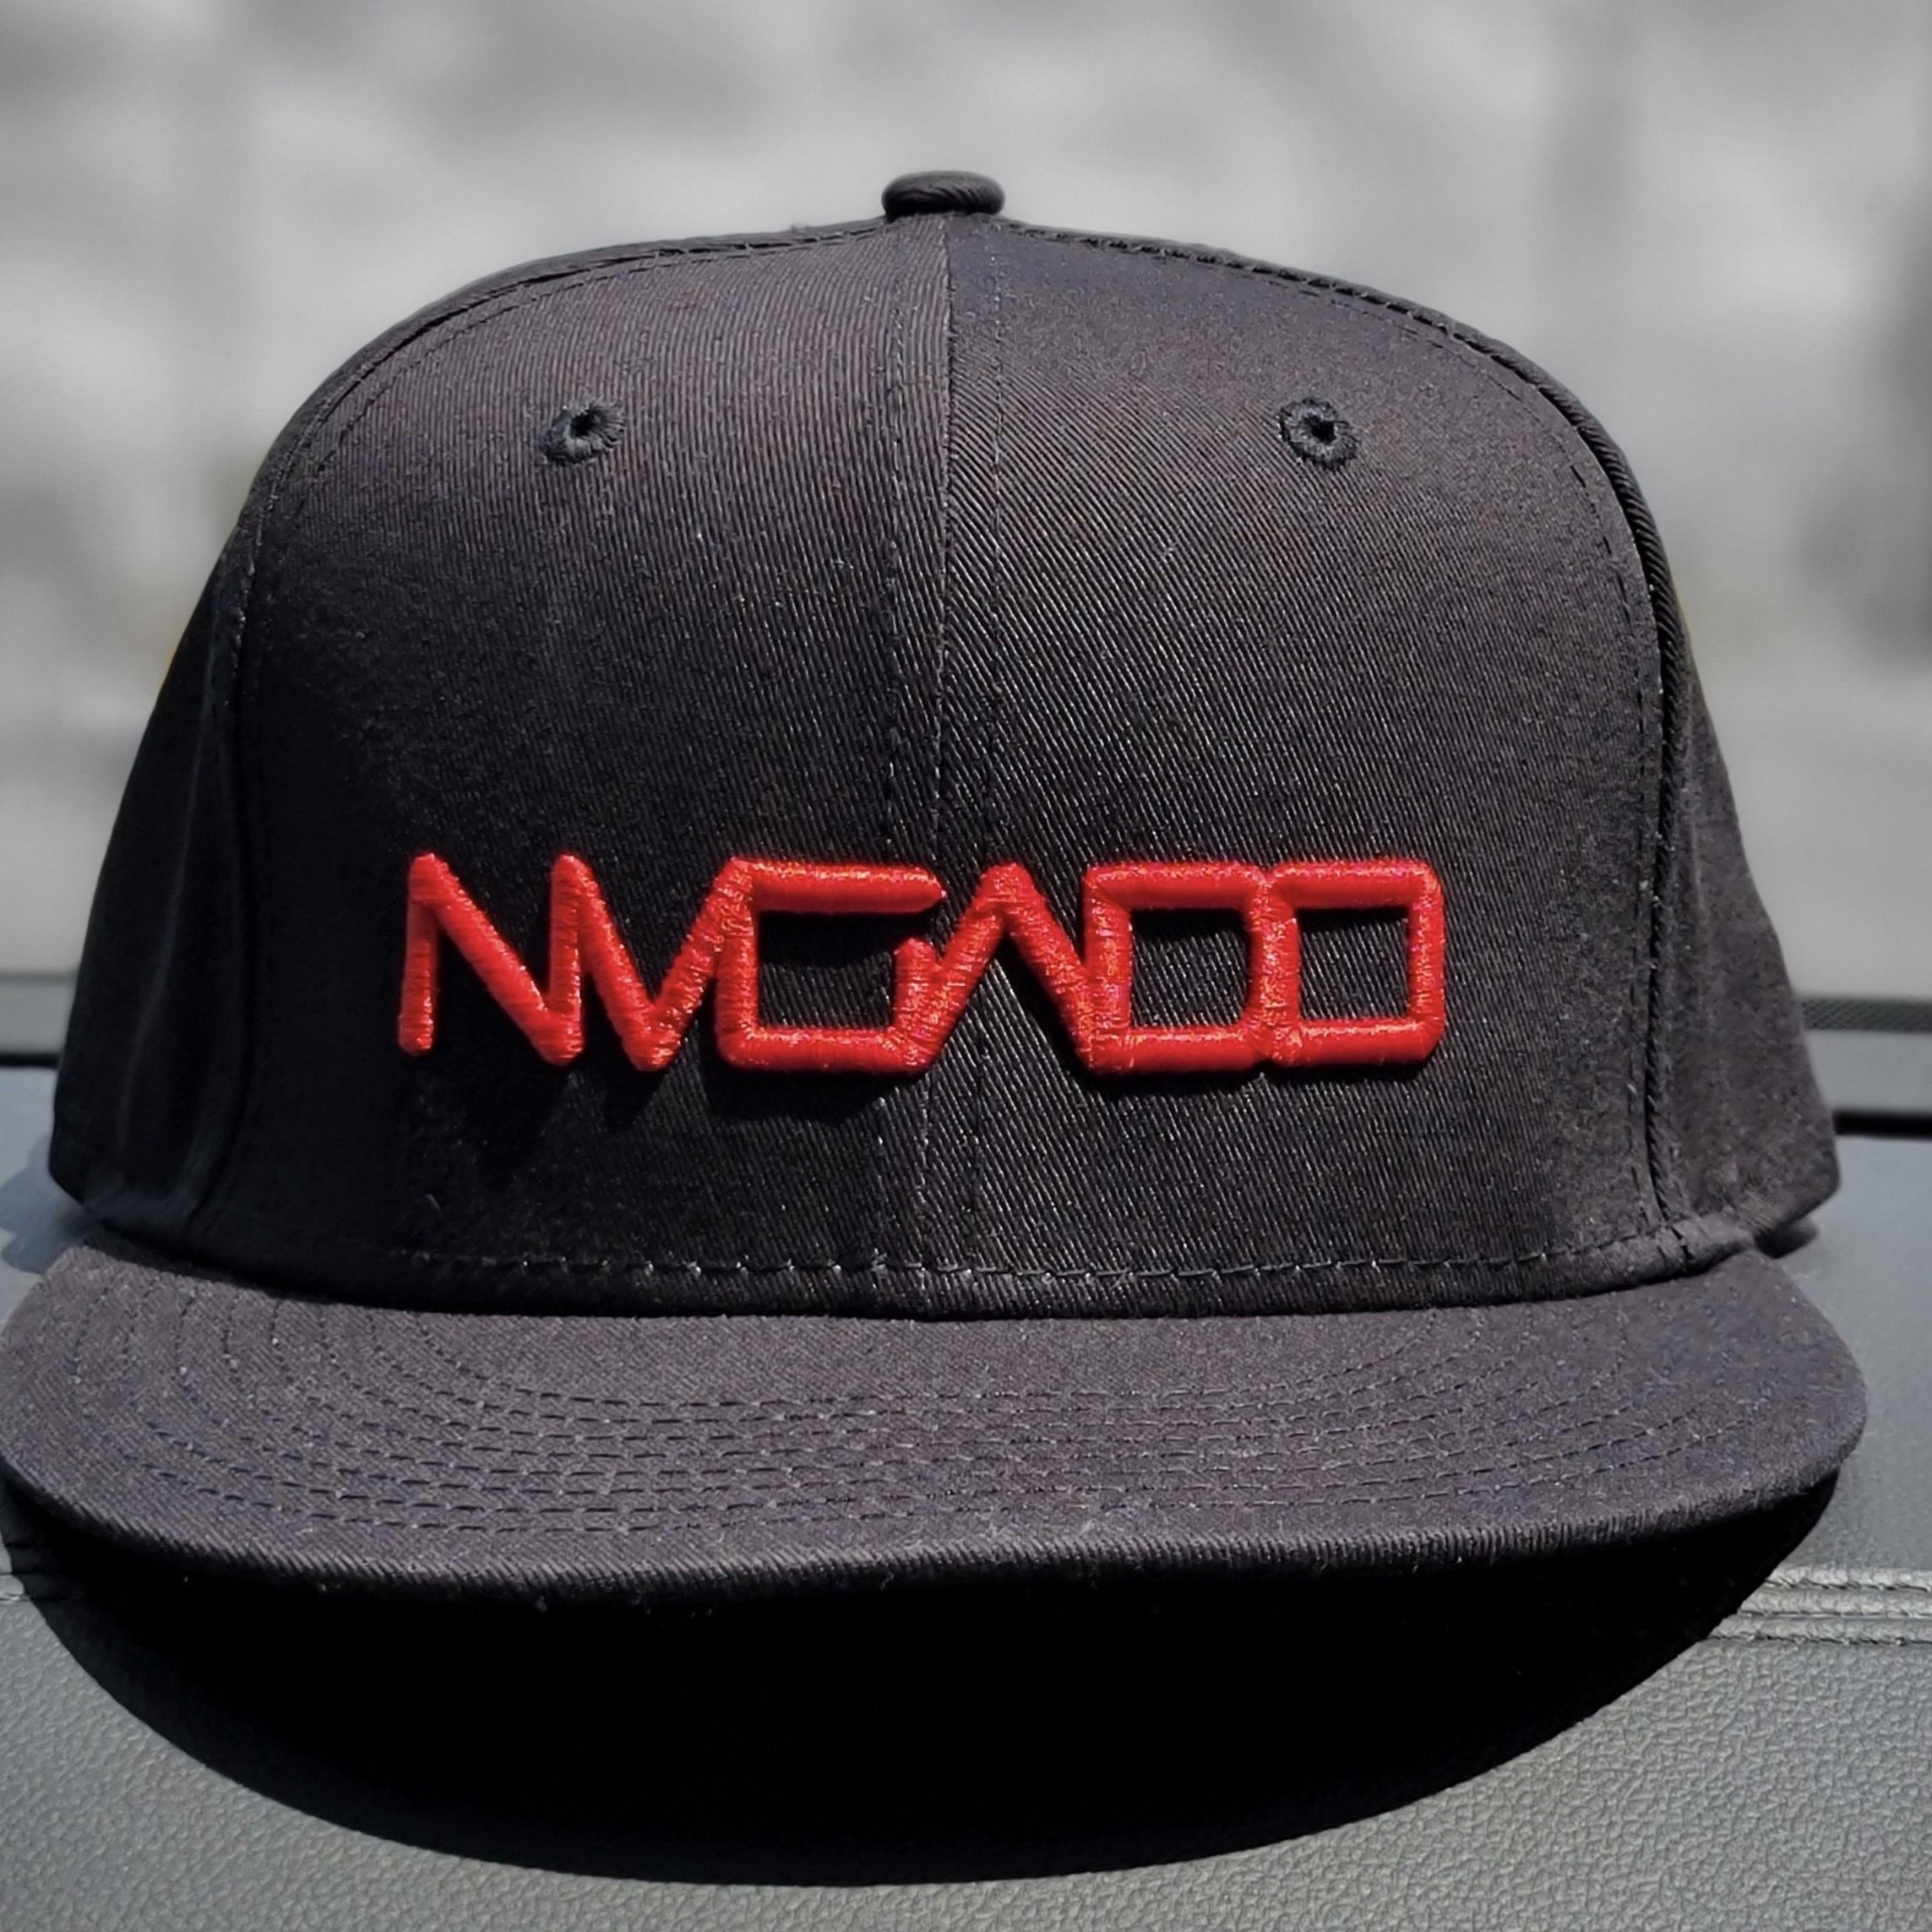 NVGADO 3D Snapback Red on Black 